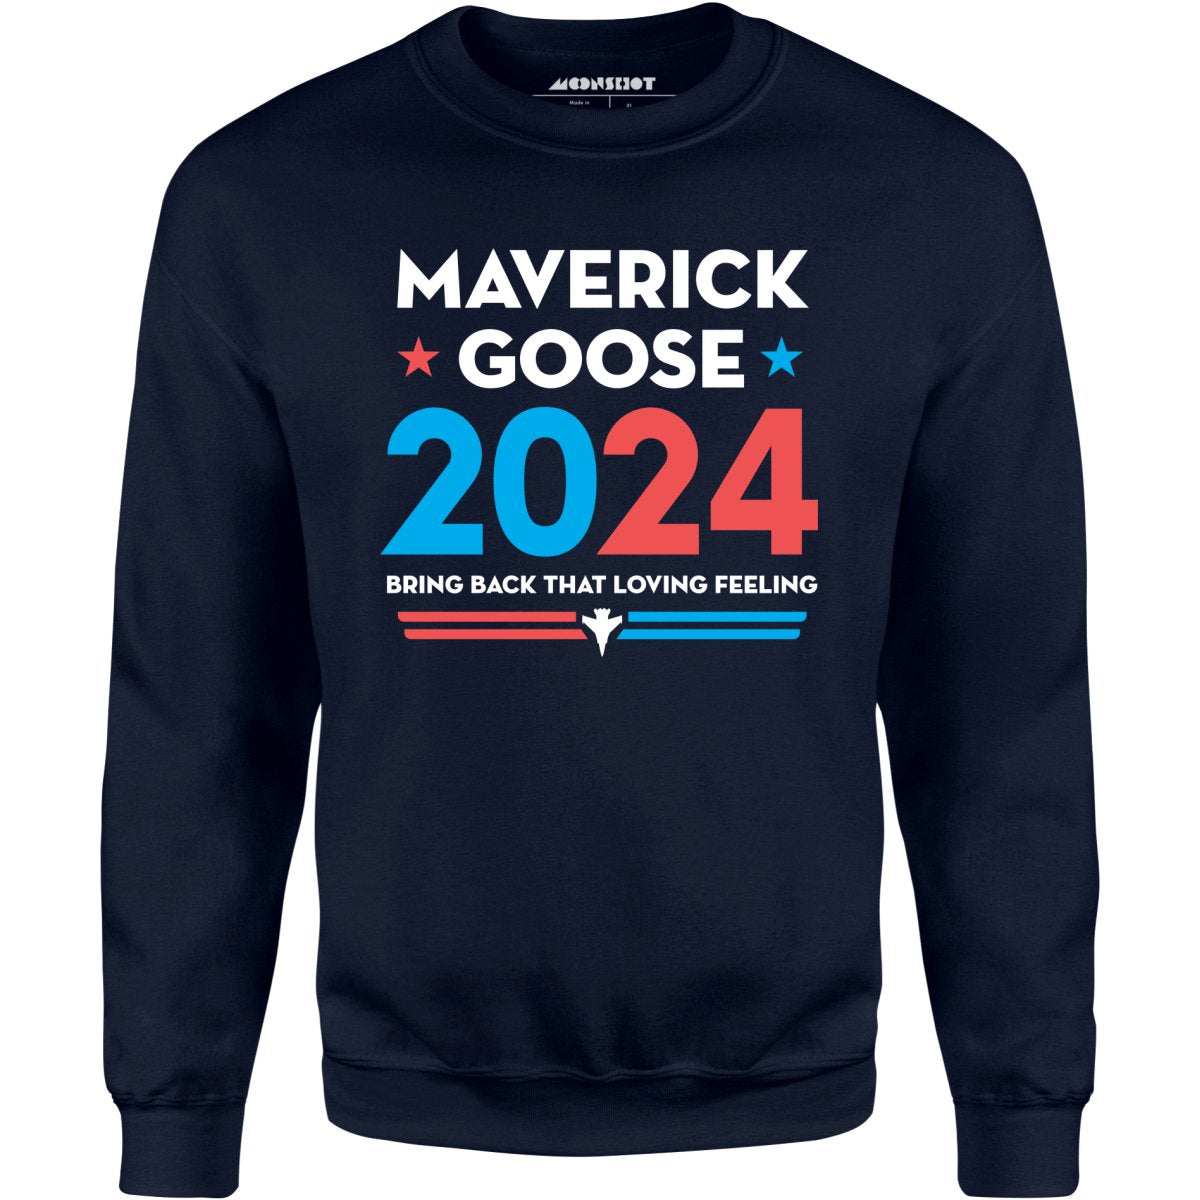 Maverick Goose 2024 - Unisex Sweatshirt